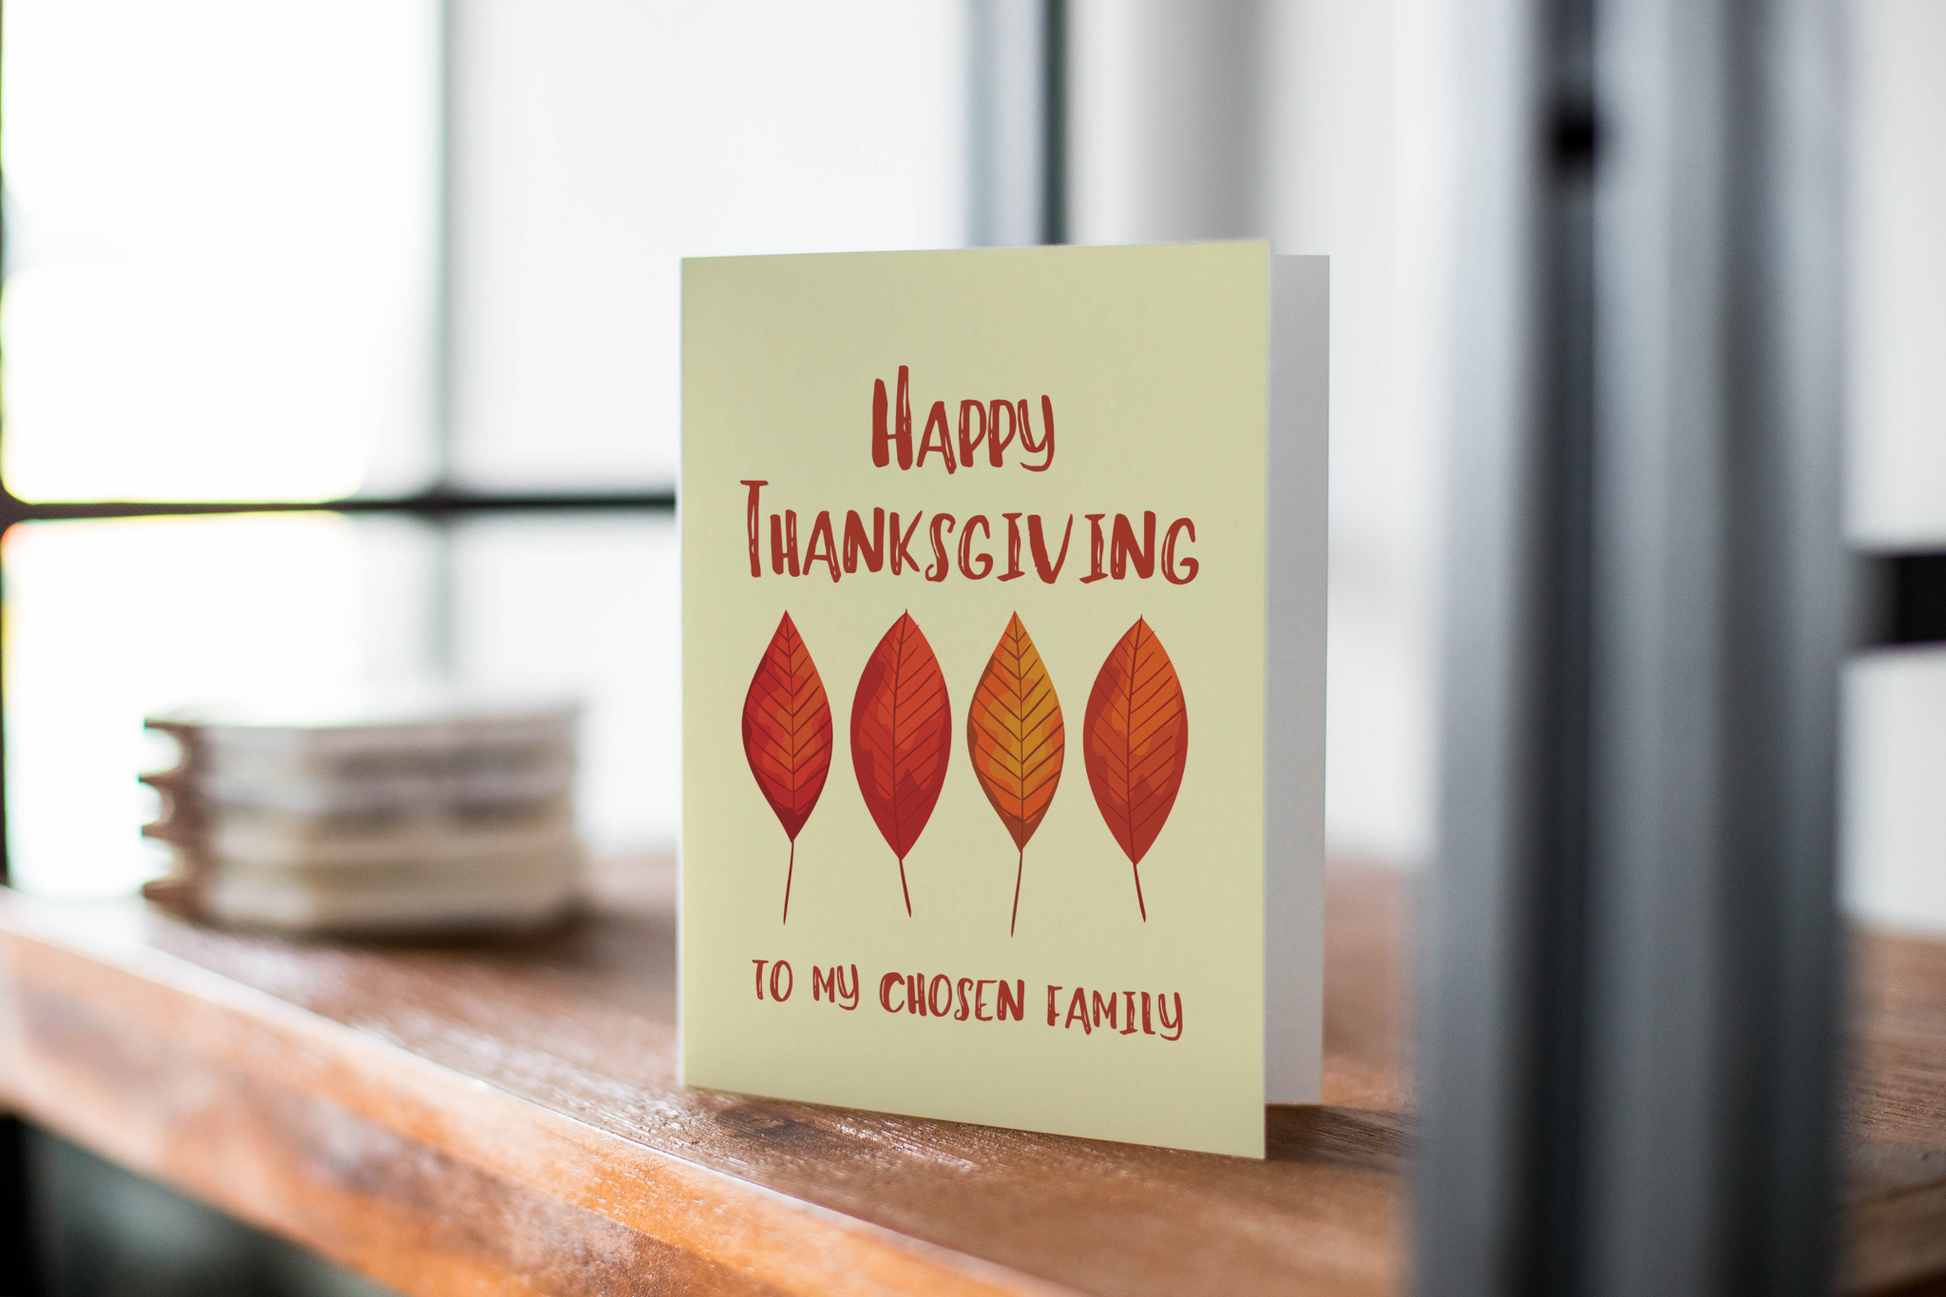 Dear Chosen Family: Happy Thanksgiving Greeting Card, Thanksgiving Note Card.